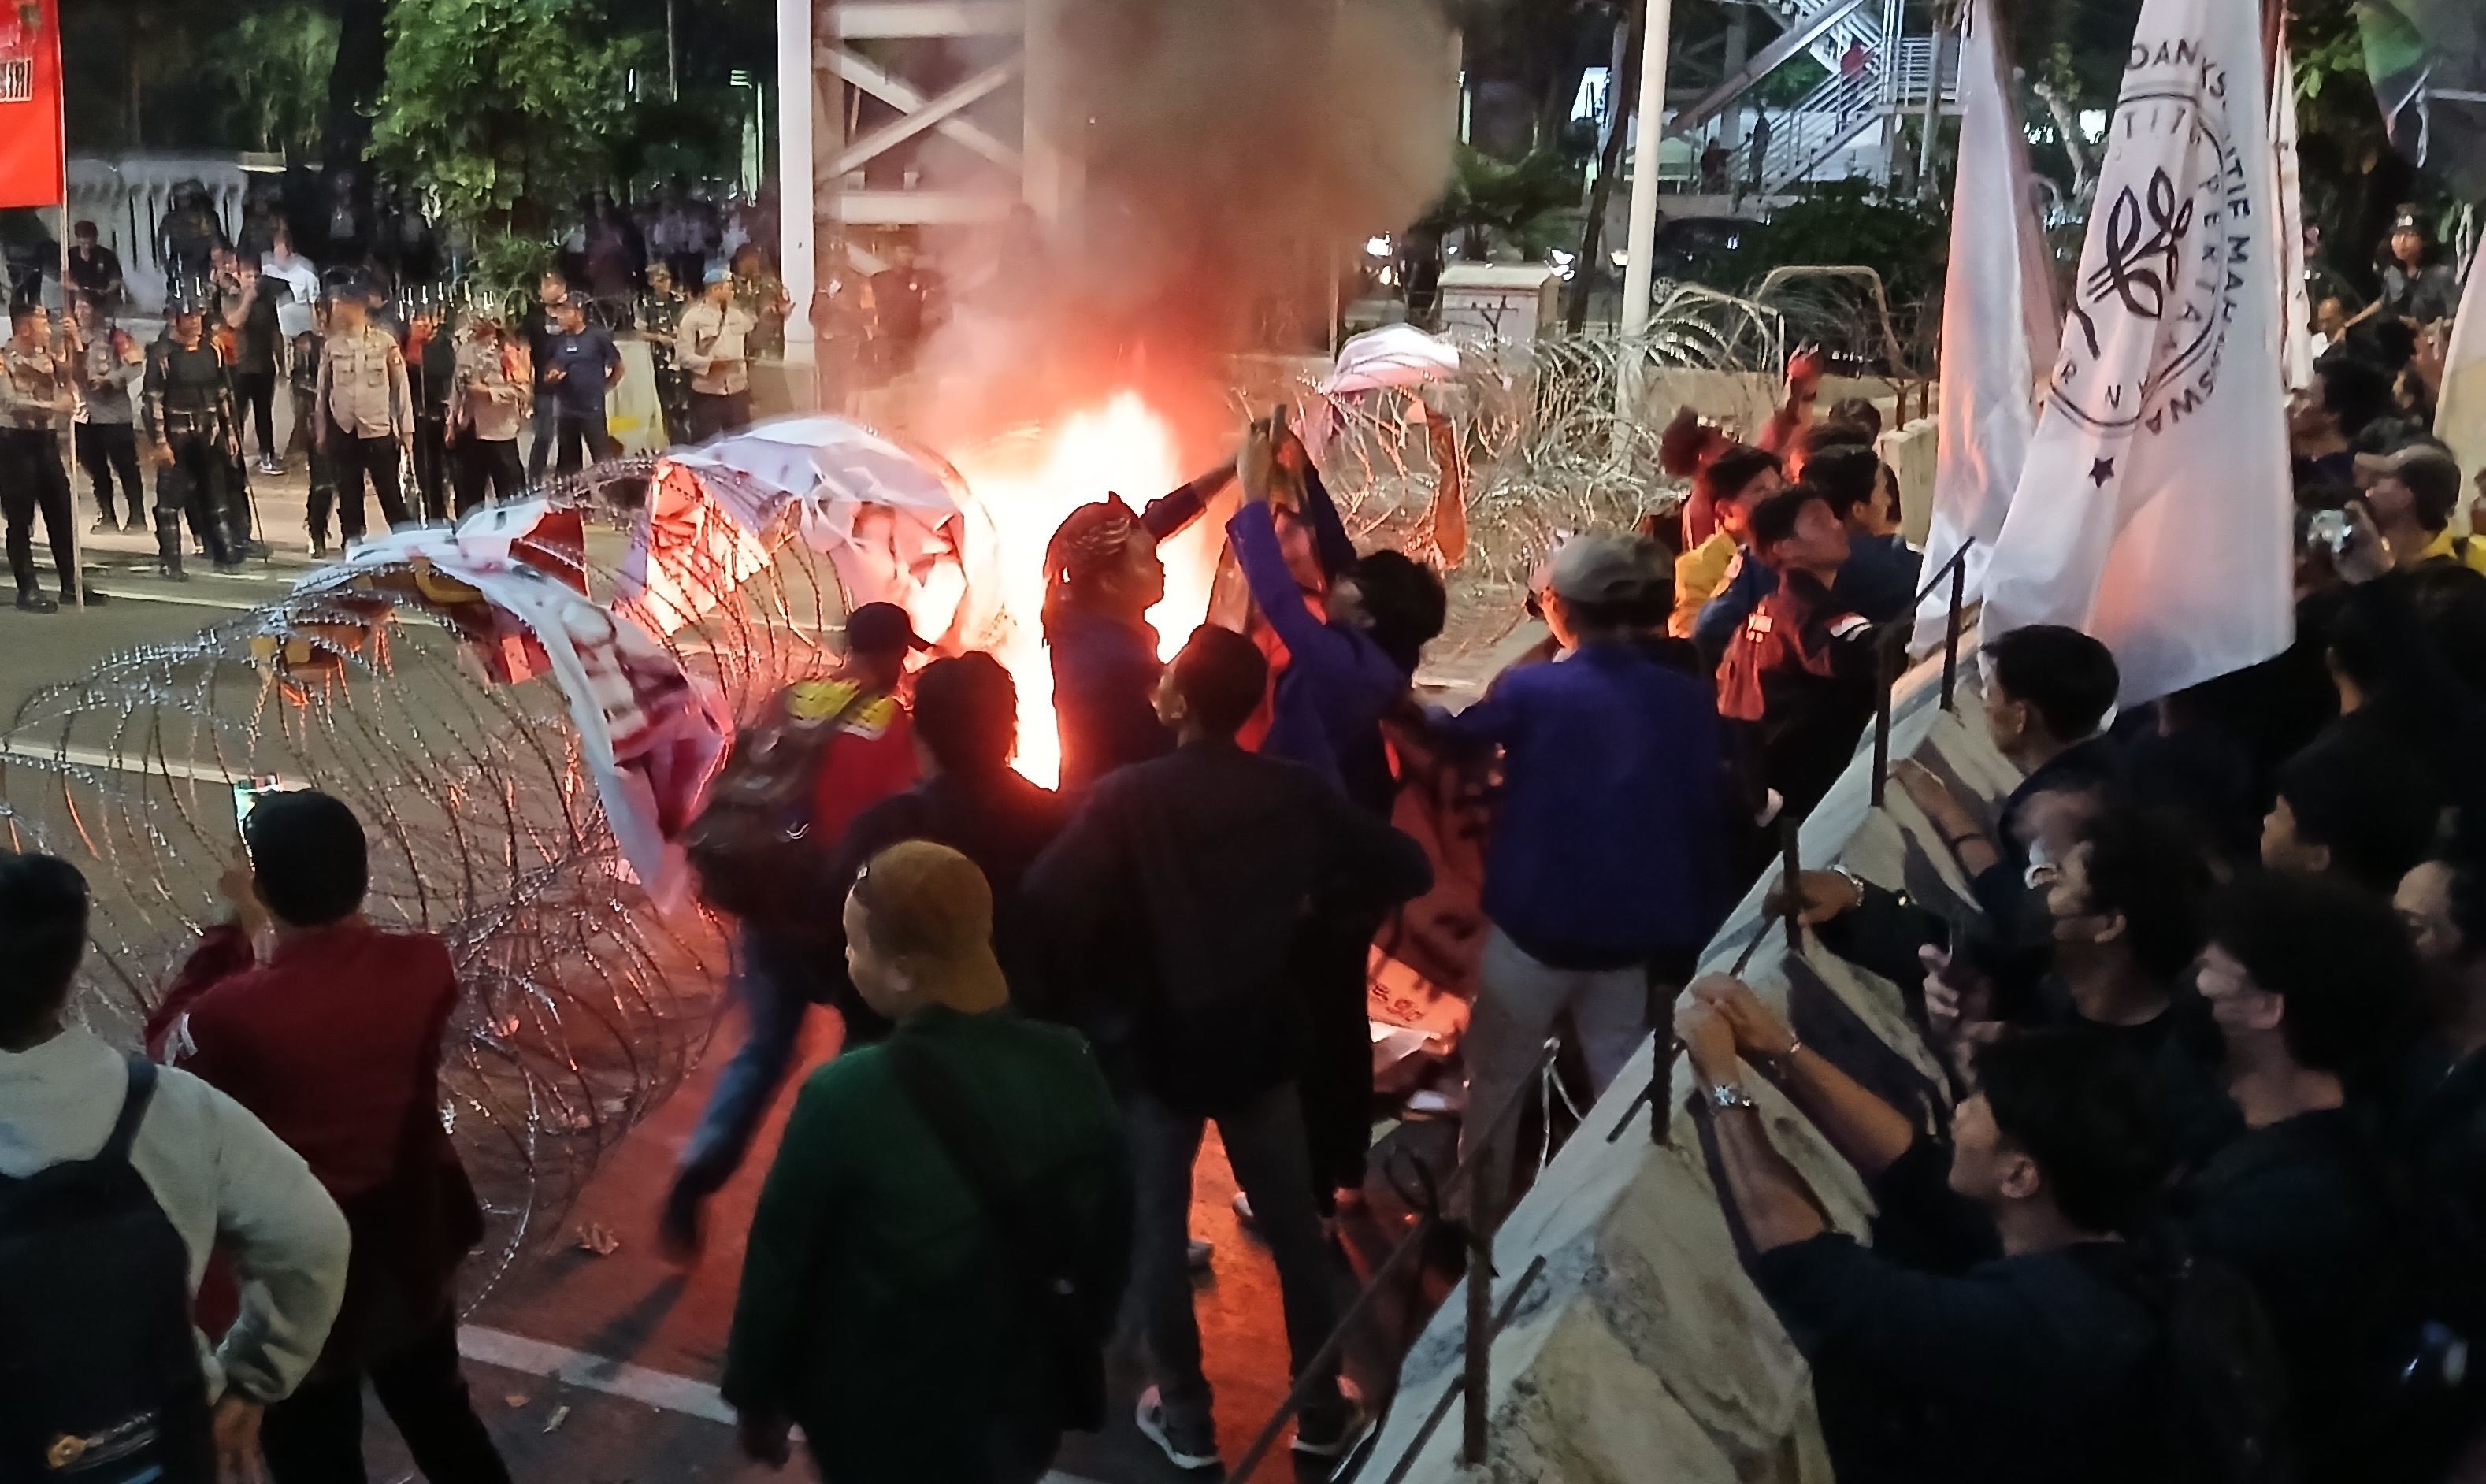 Demo BEM SI di Patung Kuda Ricuh, Bakar Spanduk dan Coba Terobos Kawat Duri